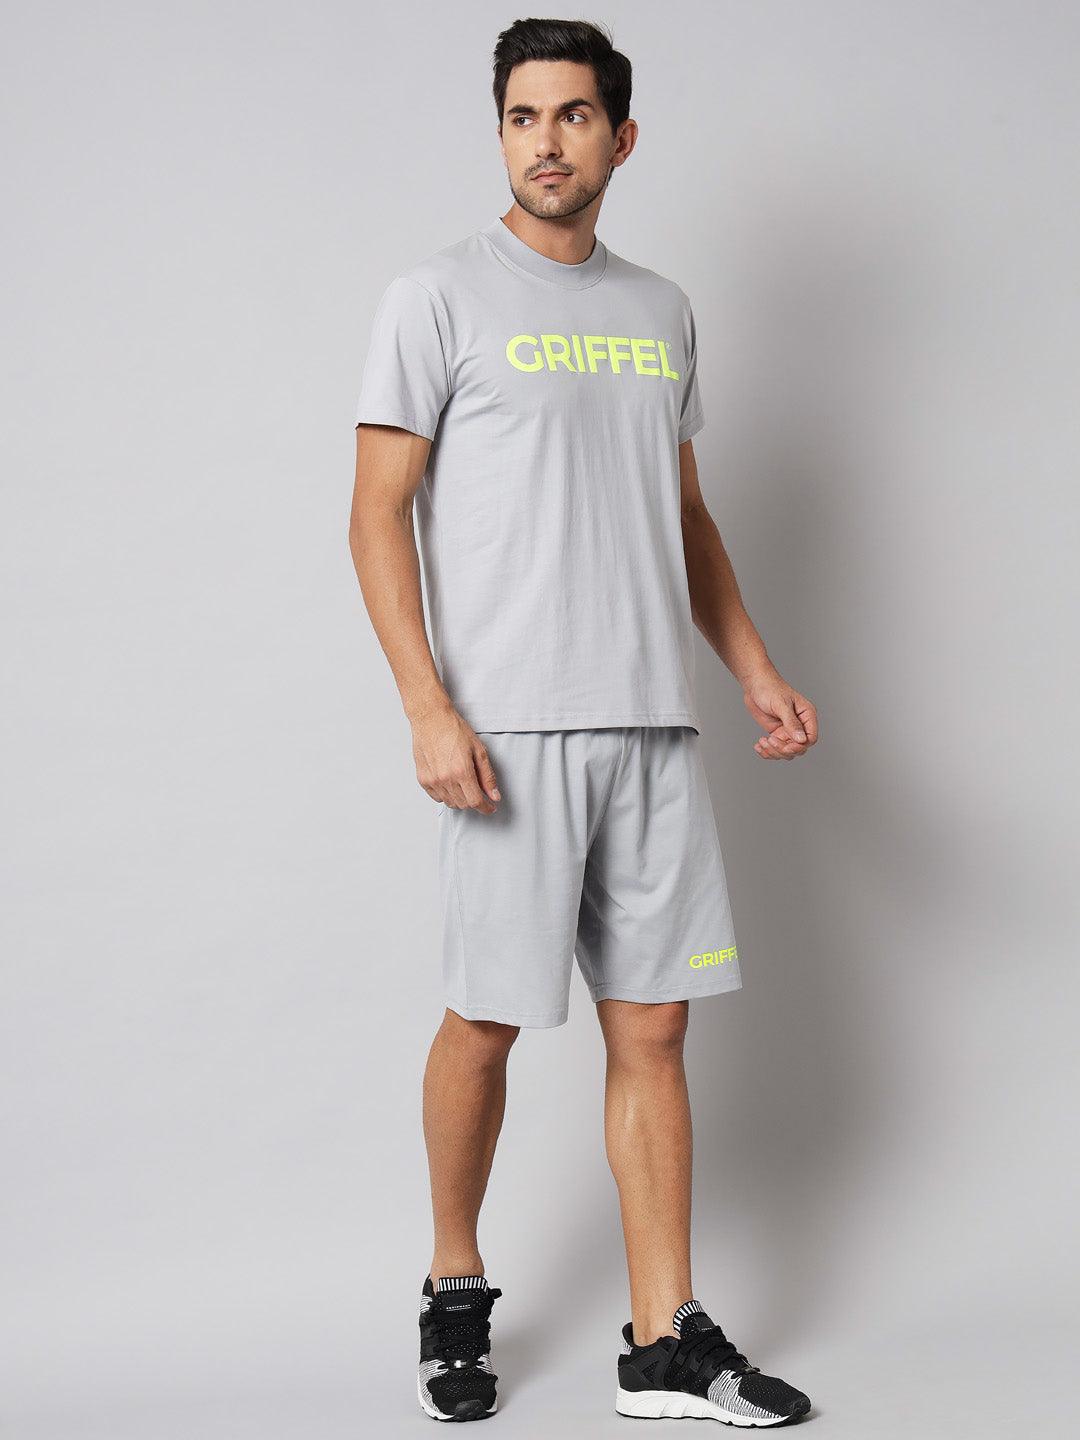 GRIFFEL Men Printed Grey Regular fit T-shirt and Short Set - griffel